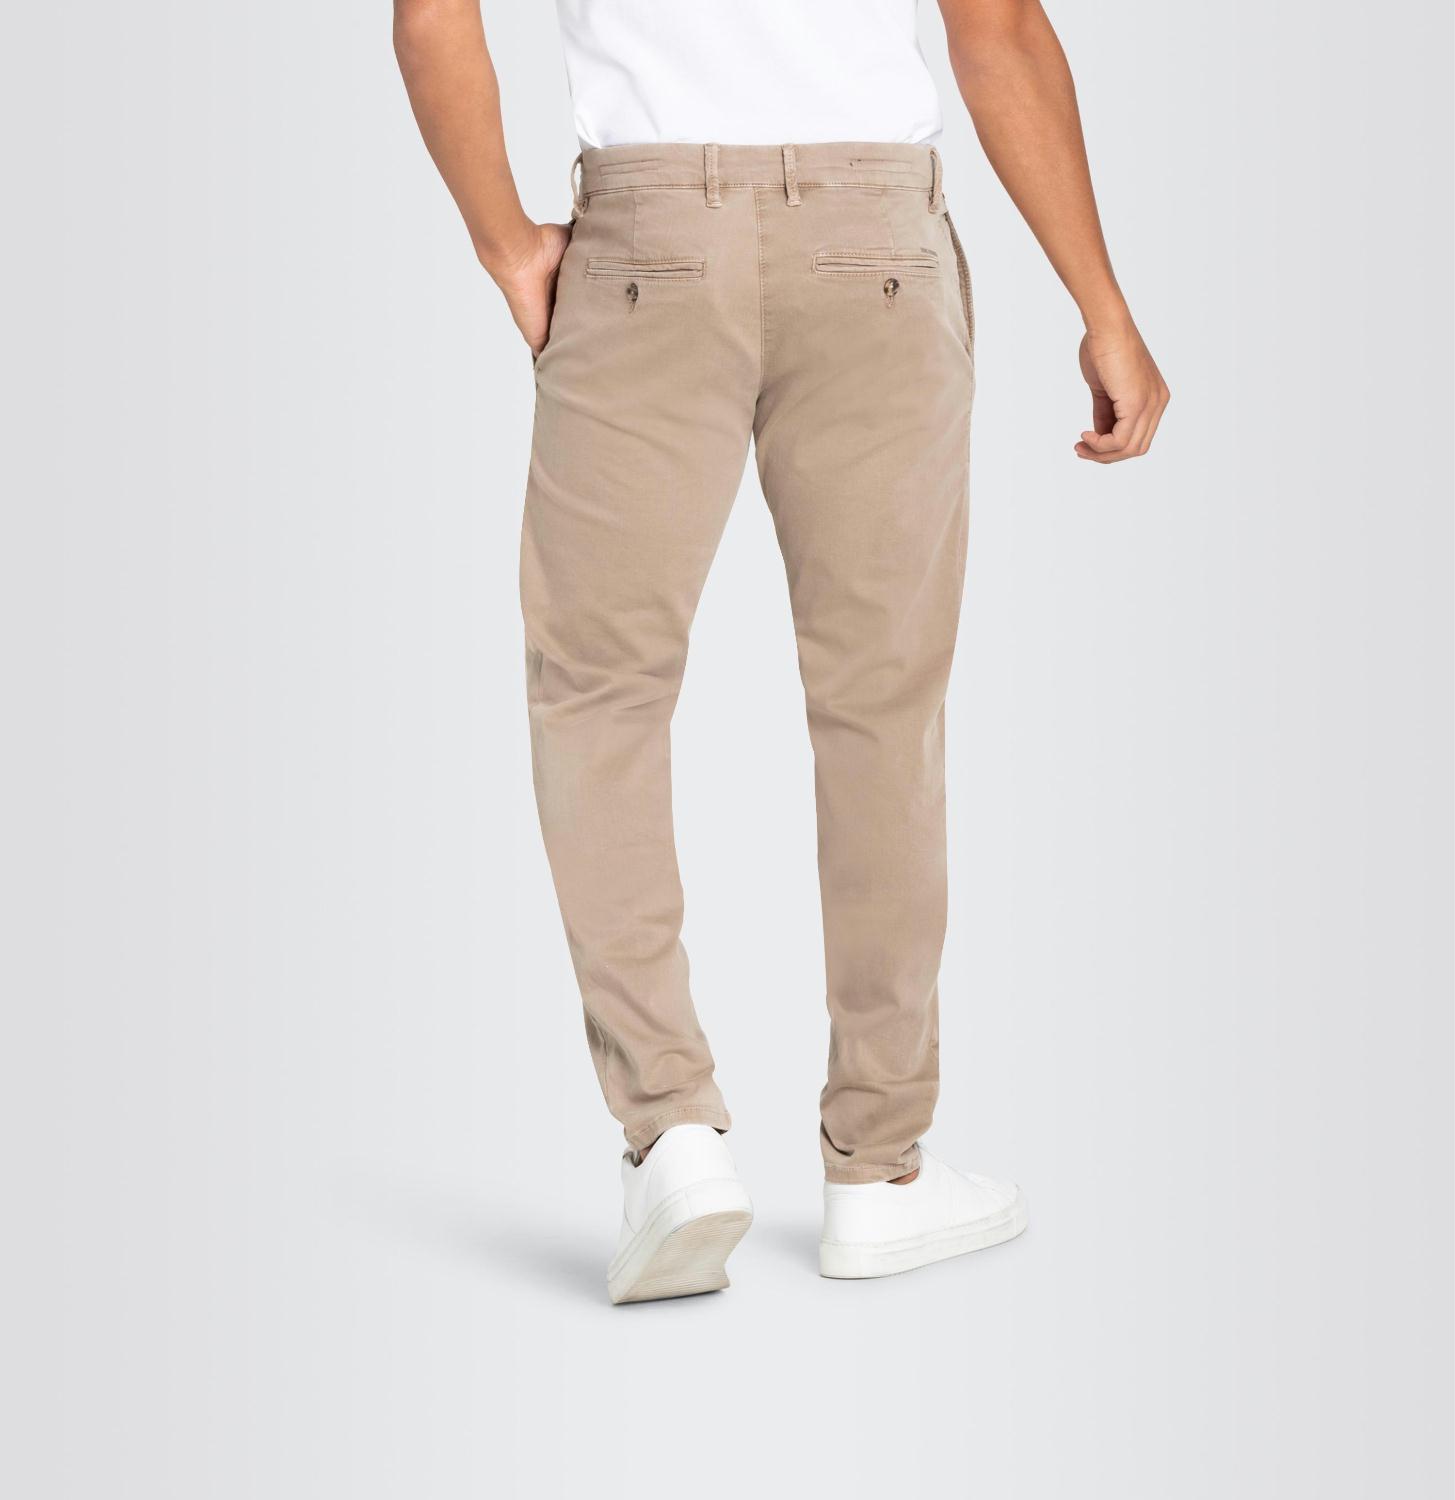 mac-jeans-driver-pants-bp_2w8g_8nn_rmw8bv